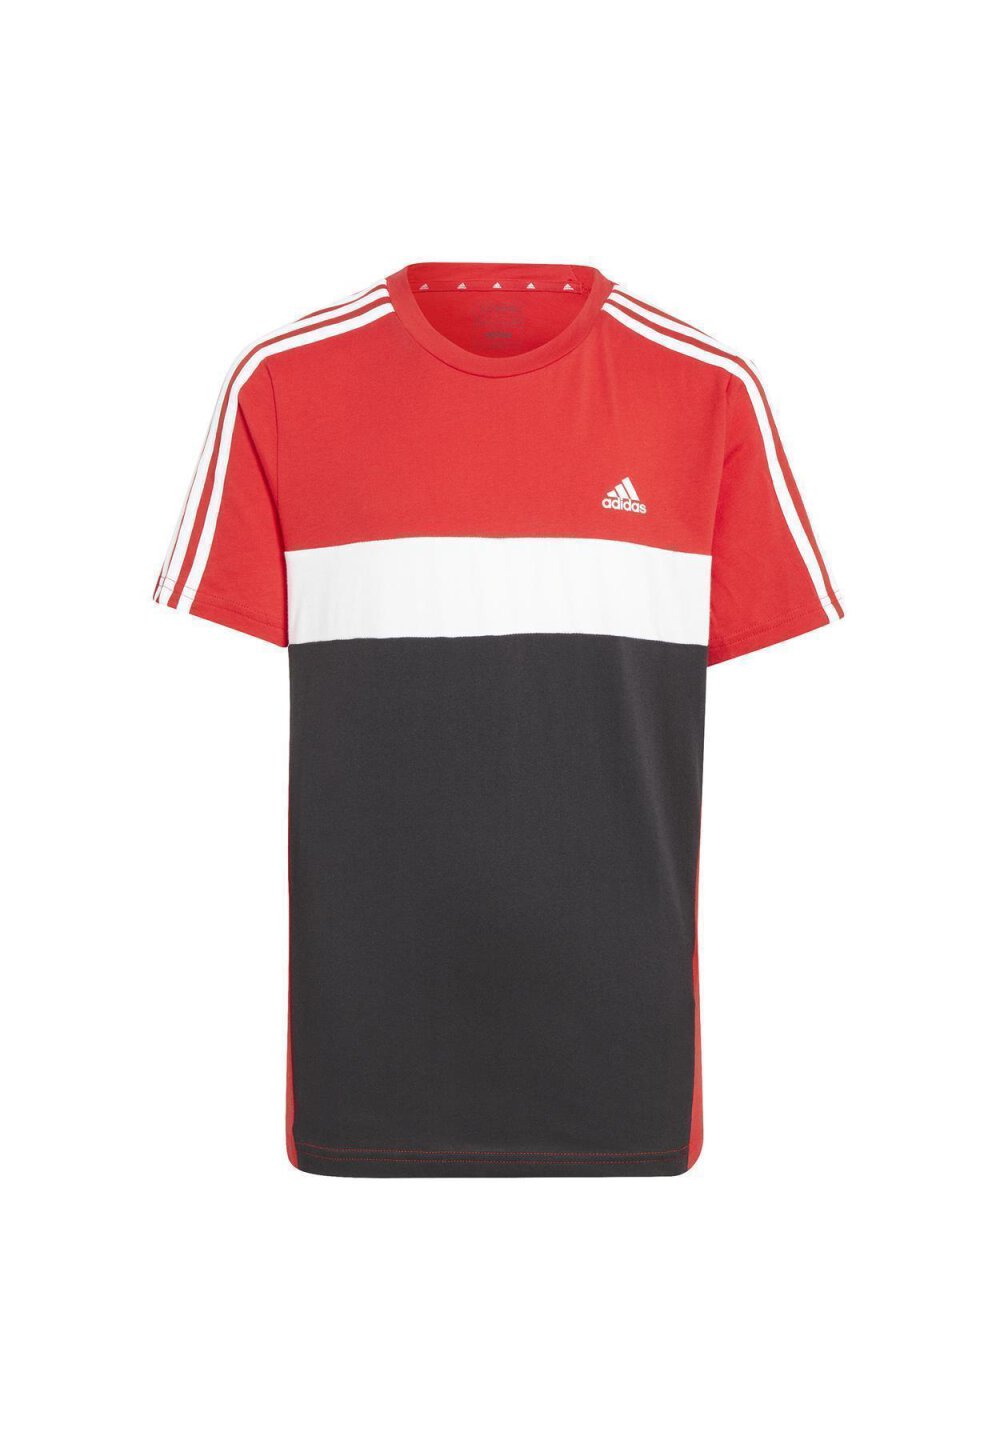 Better / / 24,99 Colorblock Tiberio Black T-Shirt 1, € 3-Stripes White Scarlet